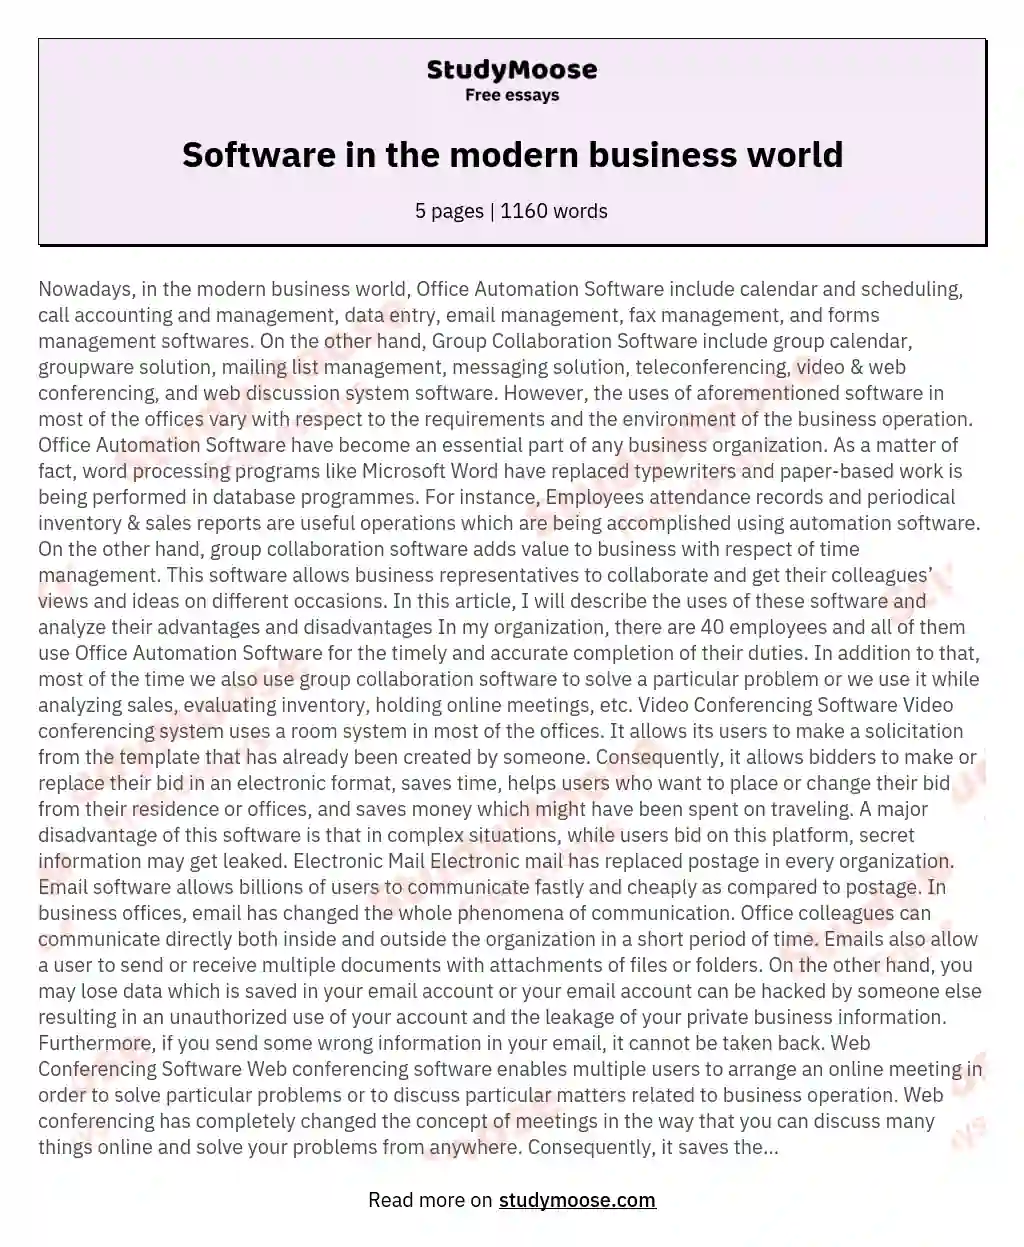 essay about software developer